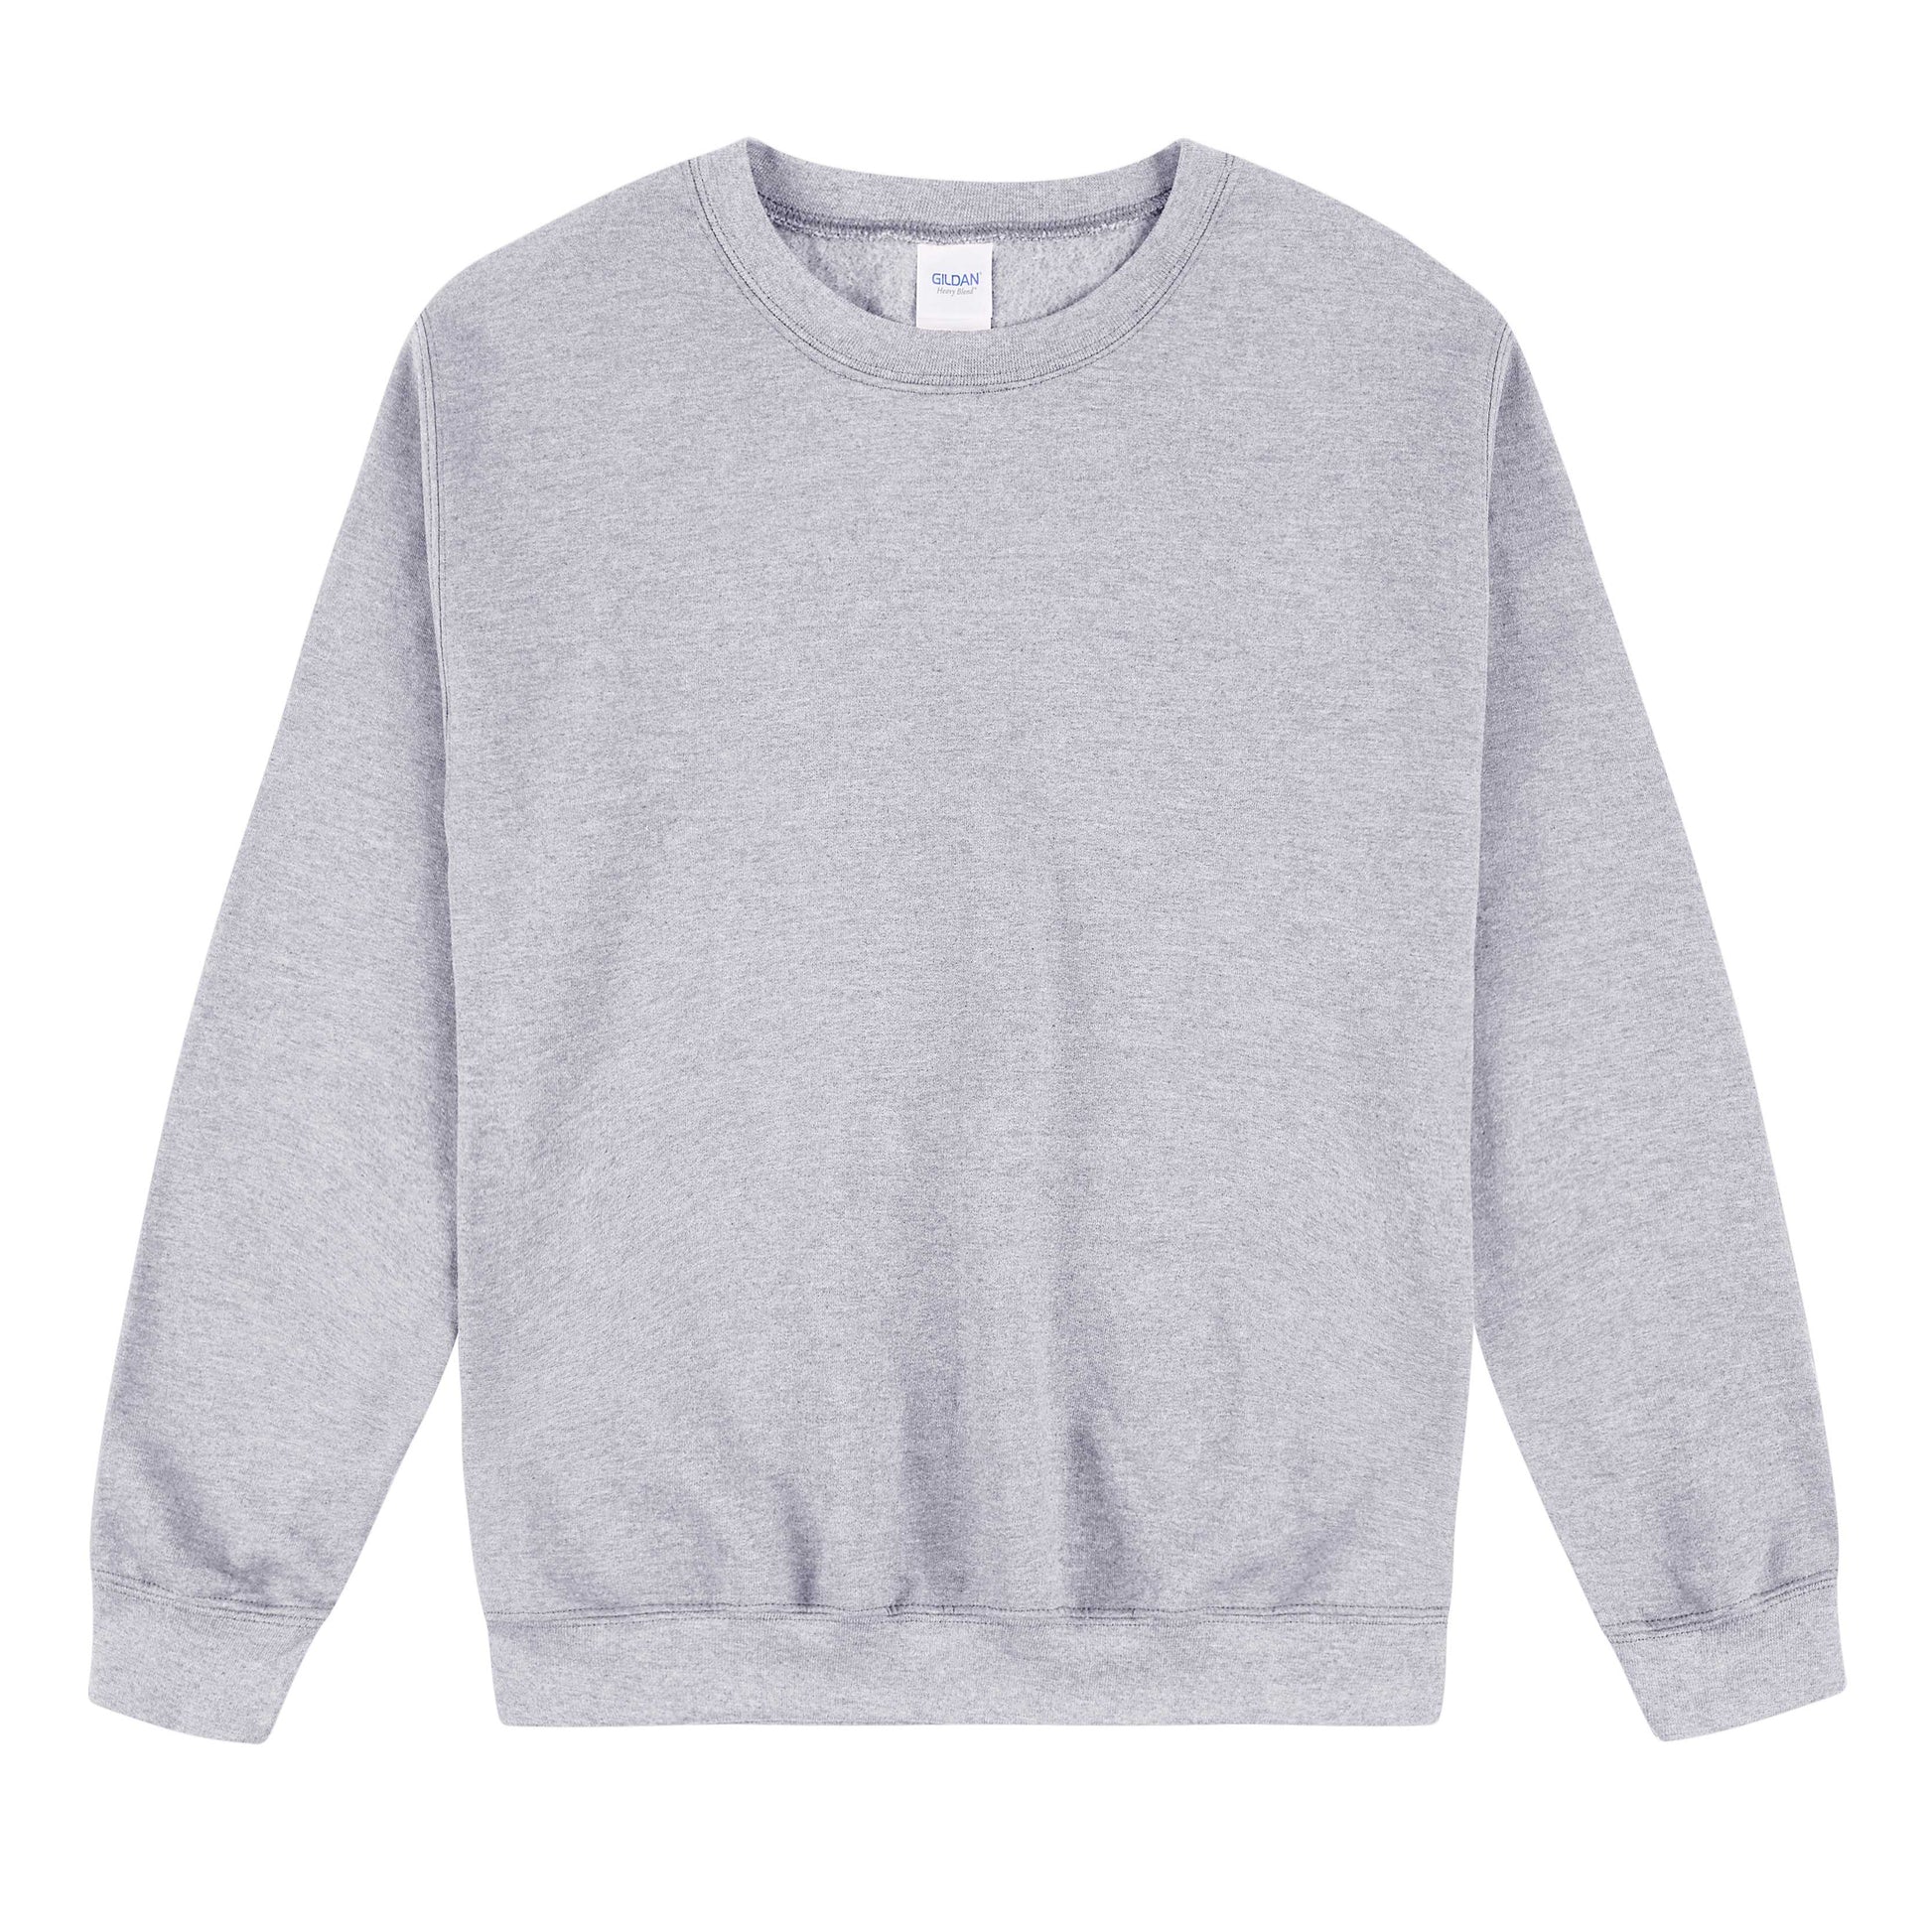 Grey Crewneck jumper sweater